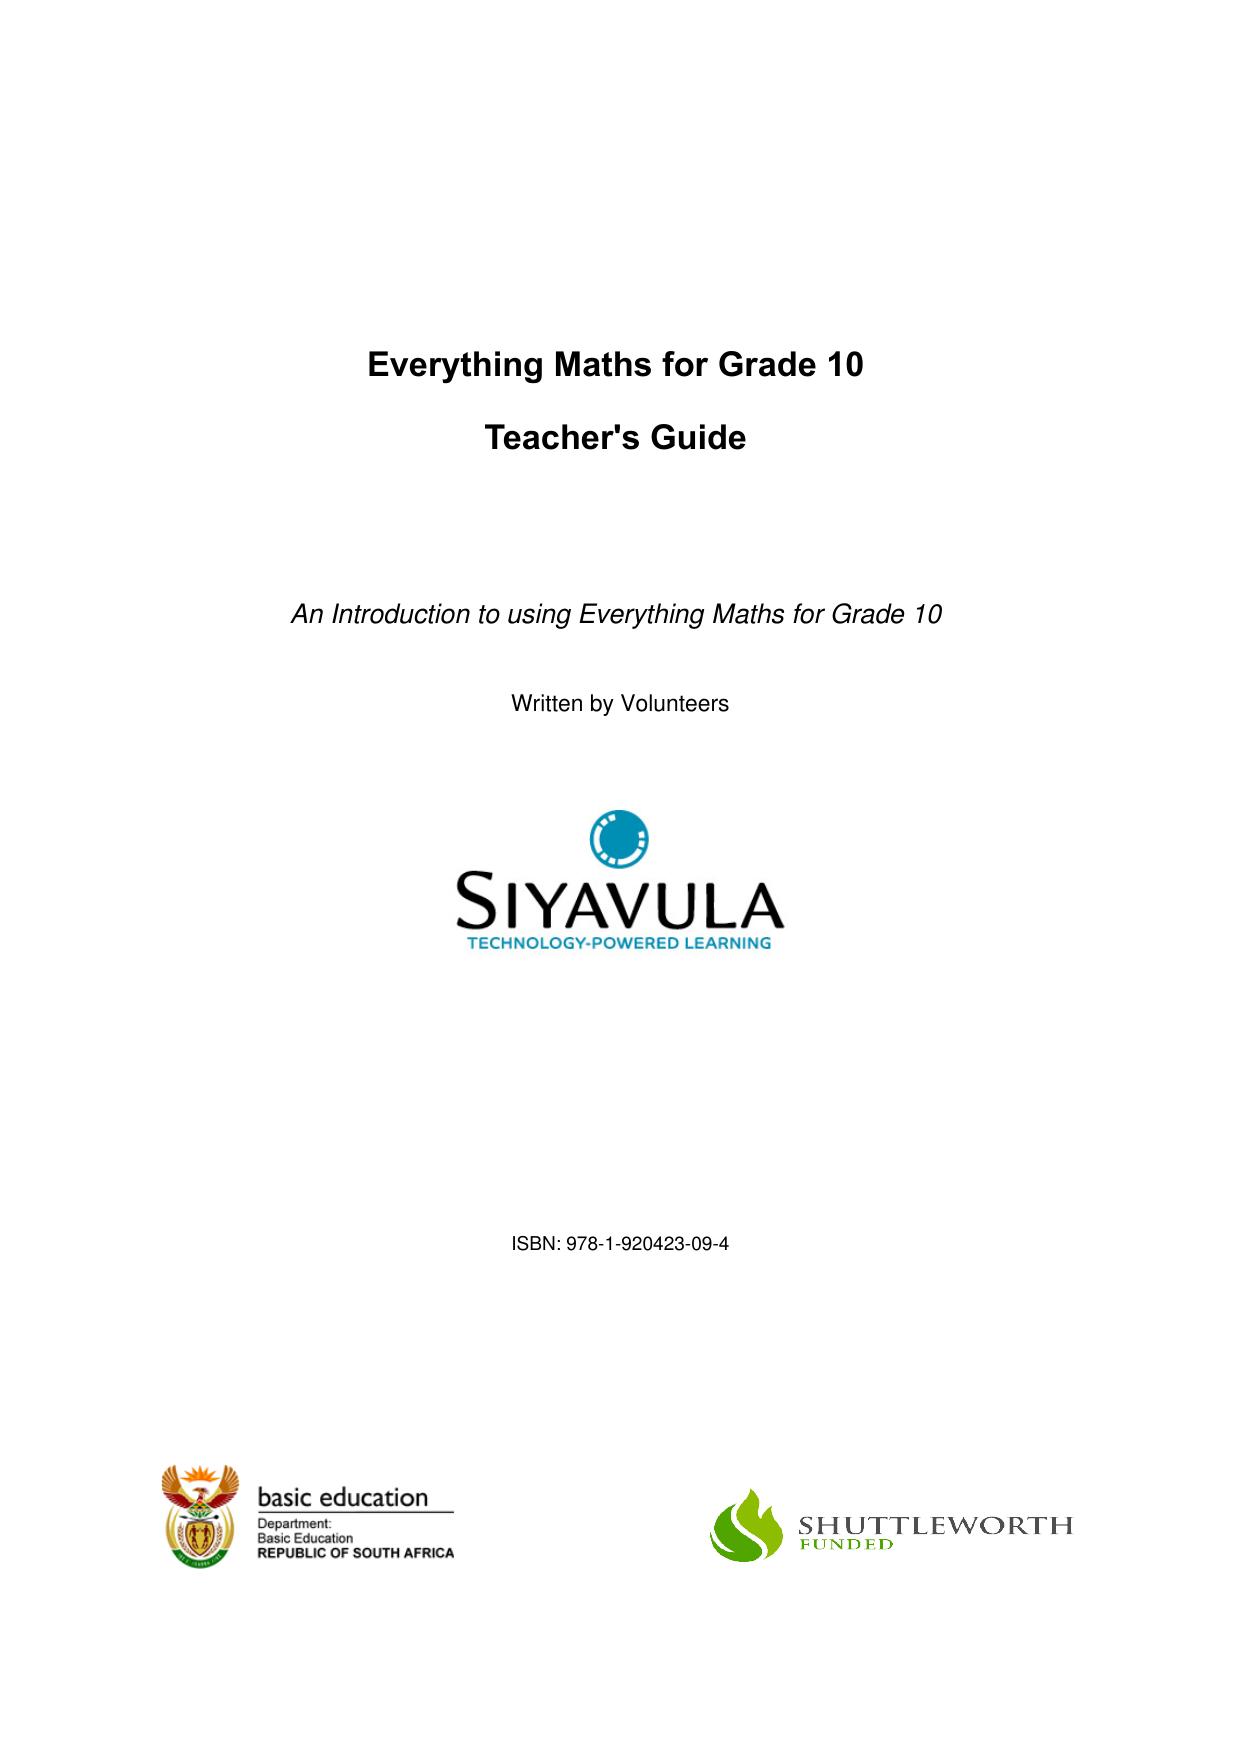 Everything Maths for Grade 10: Teachers Guide